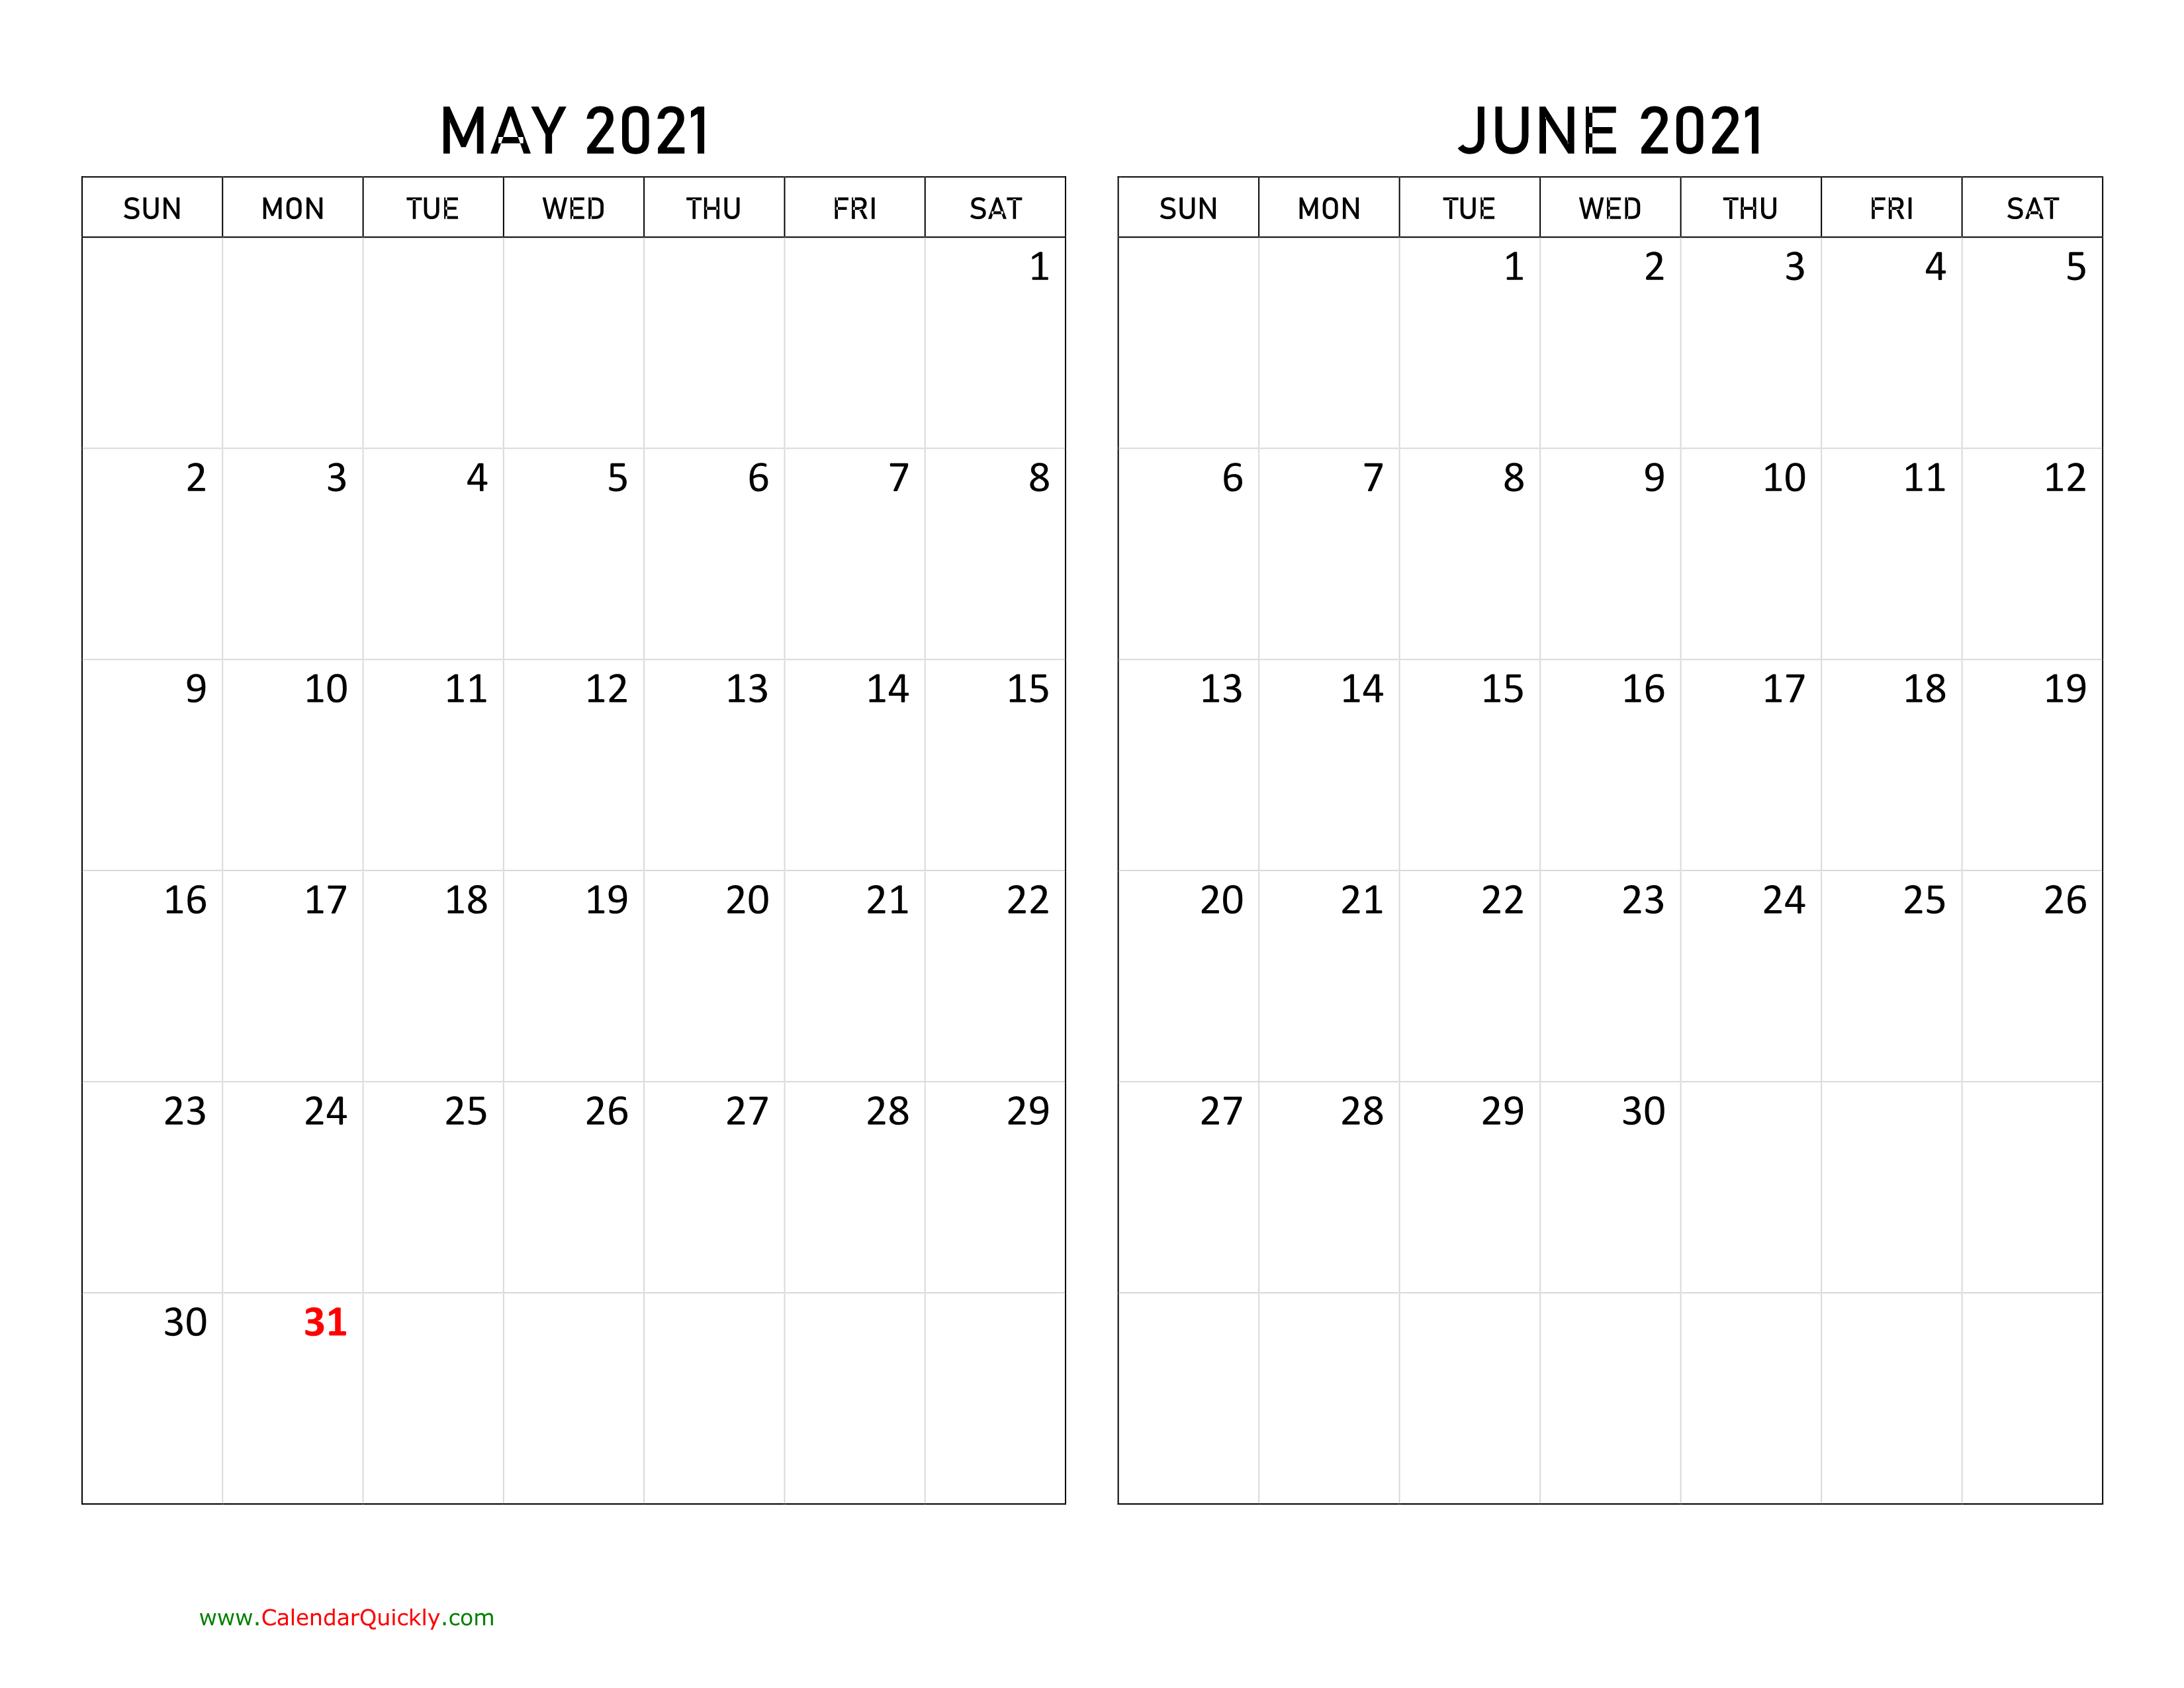 May and June 2021 Calendar Calendar Quickly